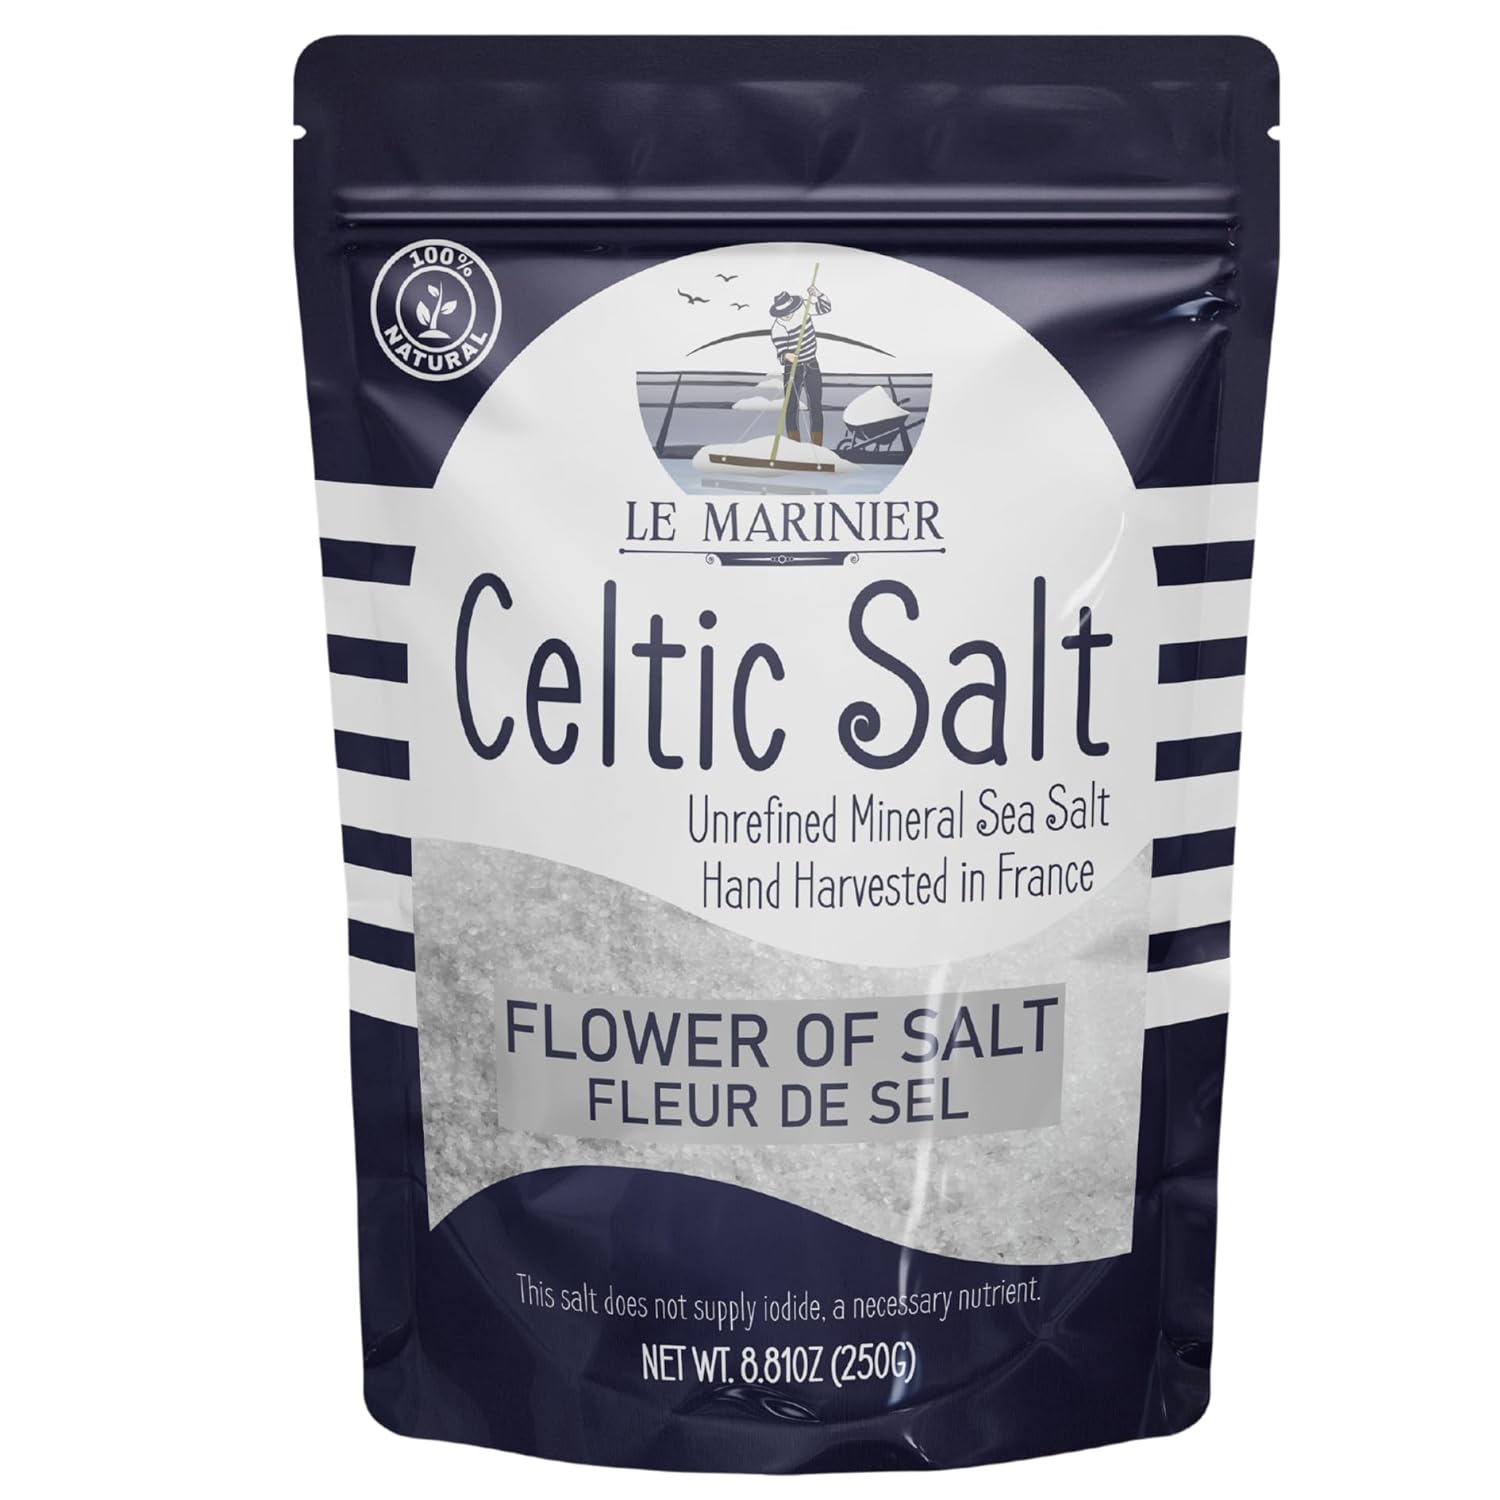 Le Marinier Celtic Salt Flower of Salt 8.81oz / 250g